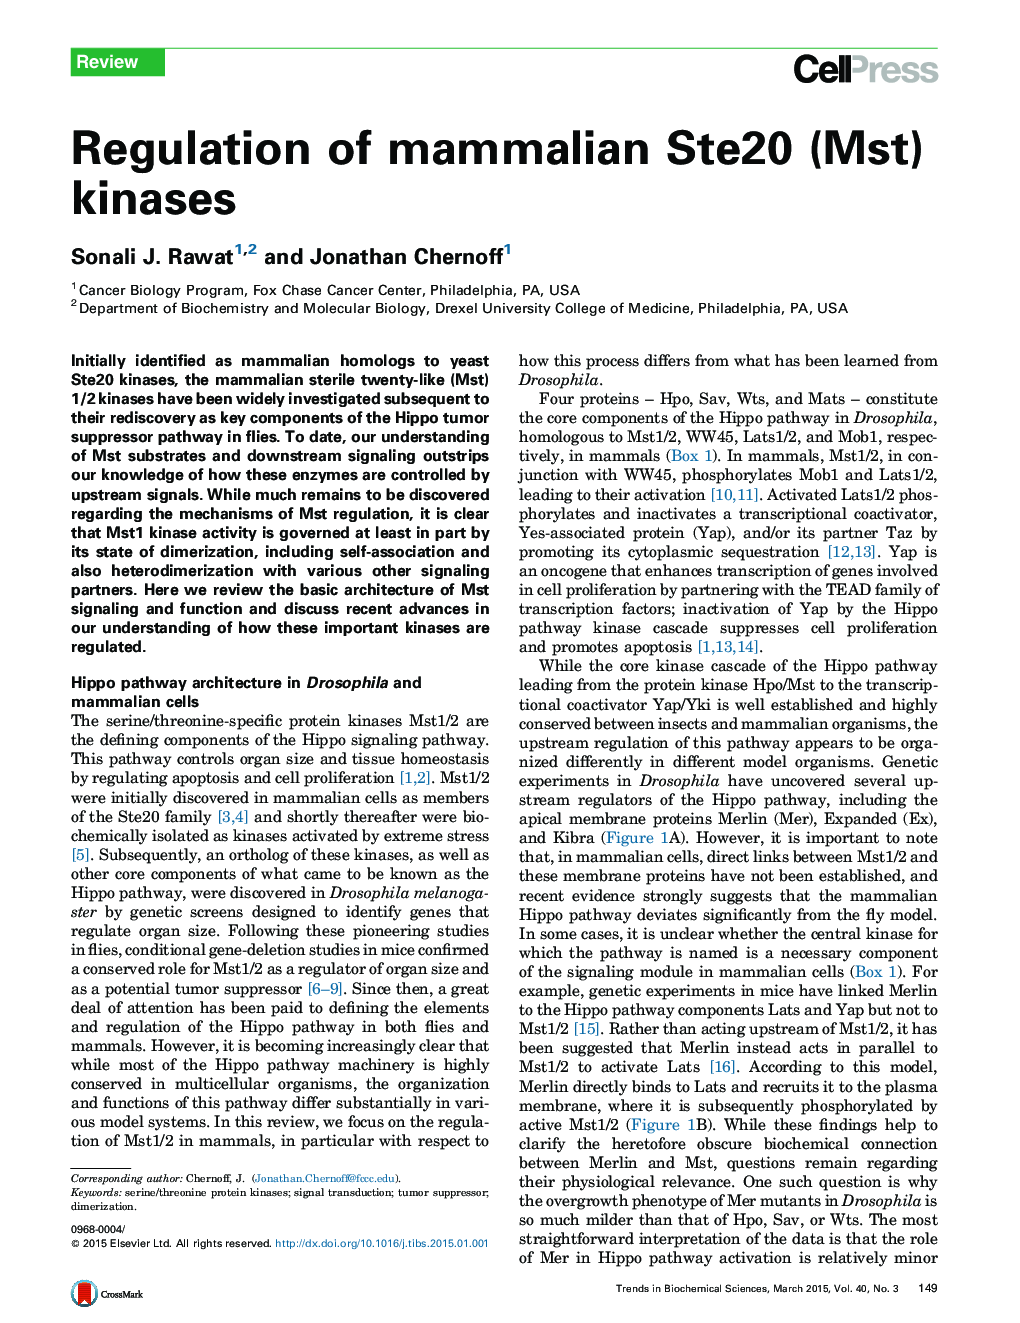 Regulation of mammalian Ste20 (Mst) kinases